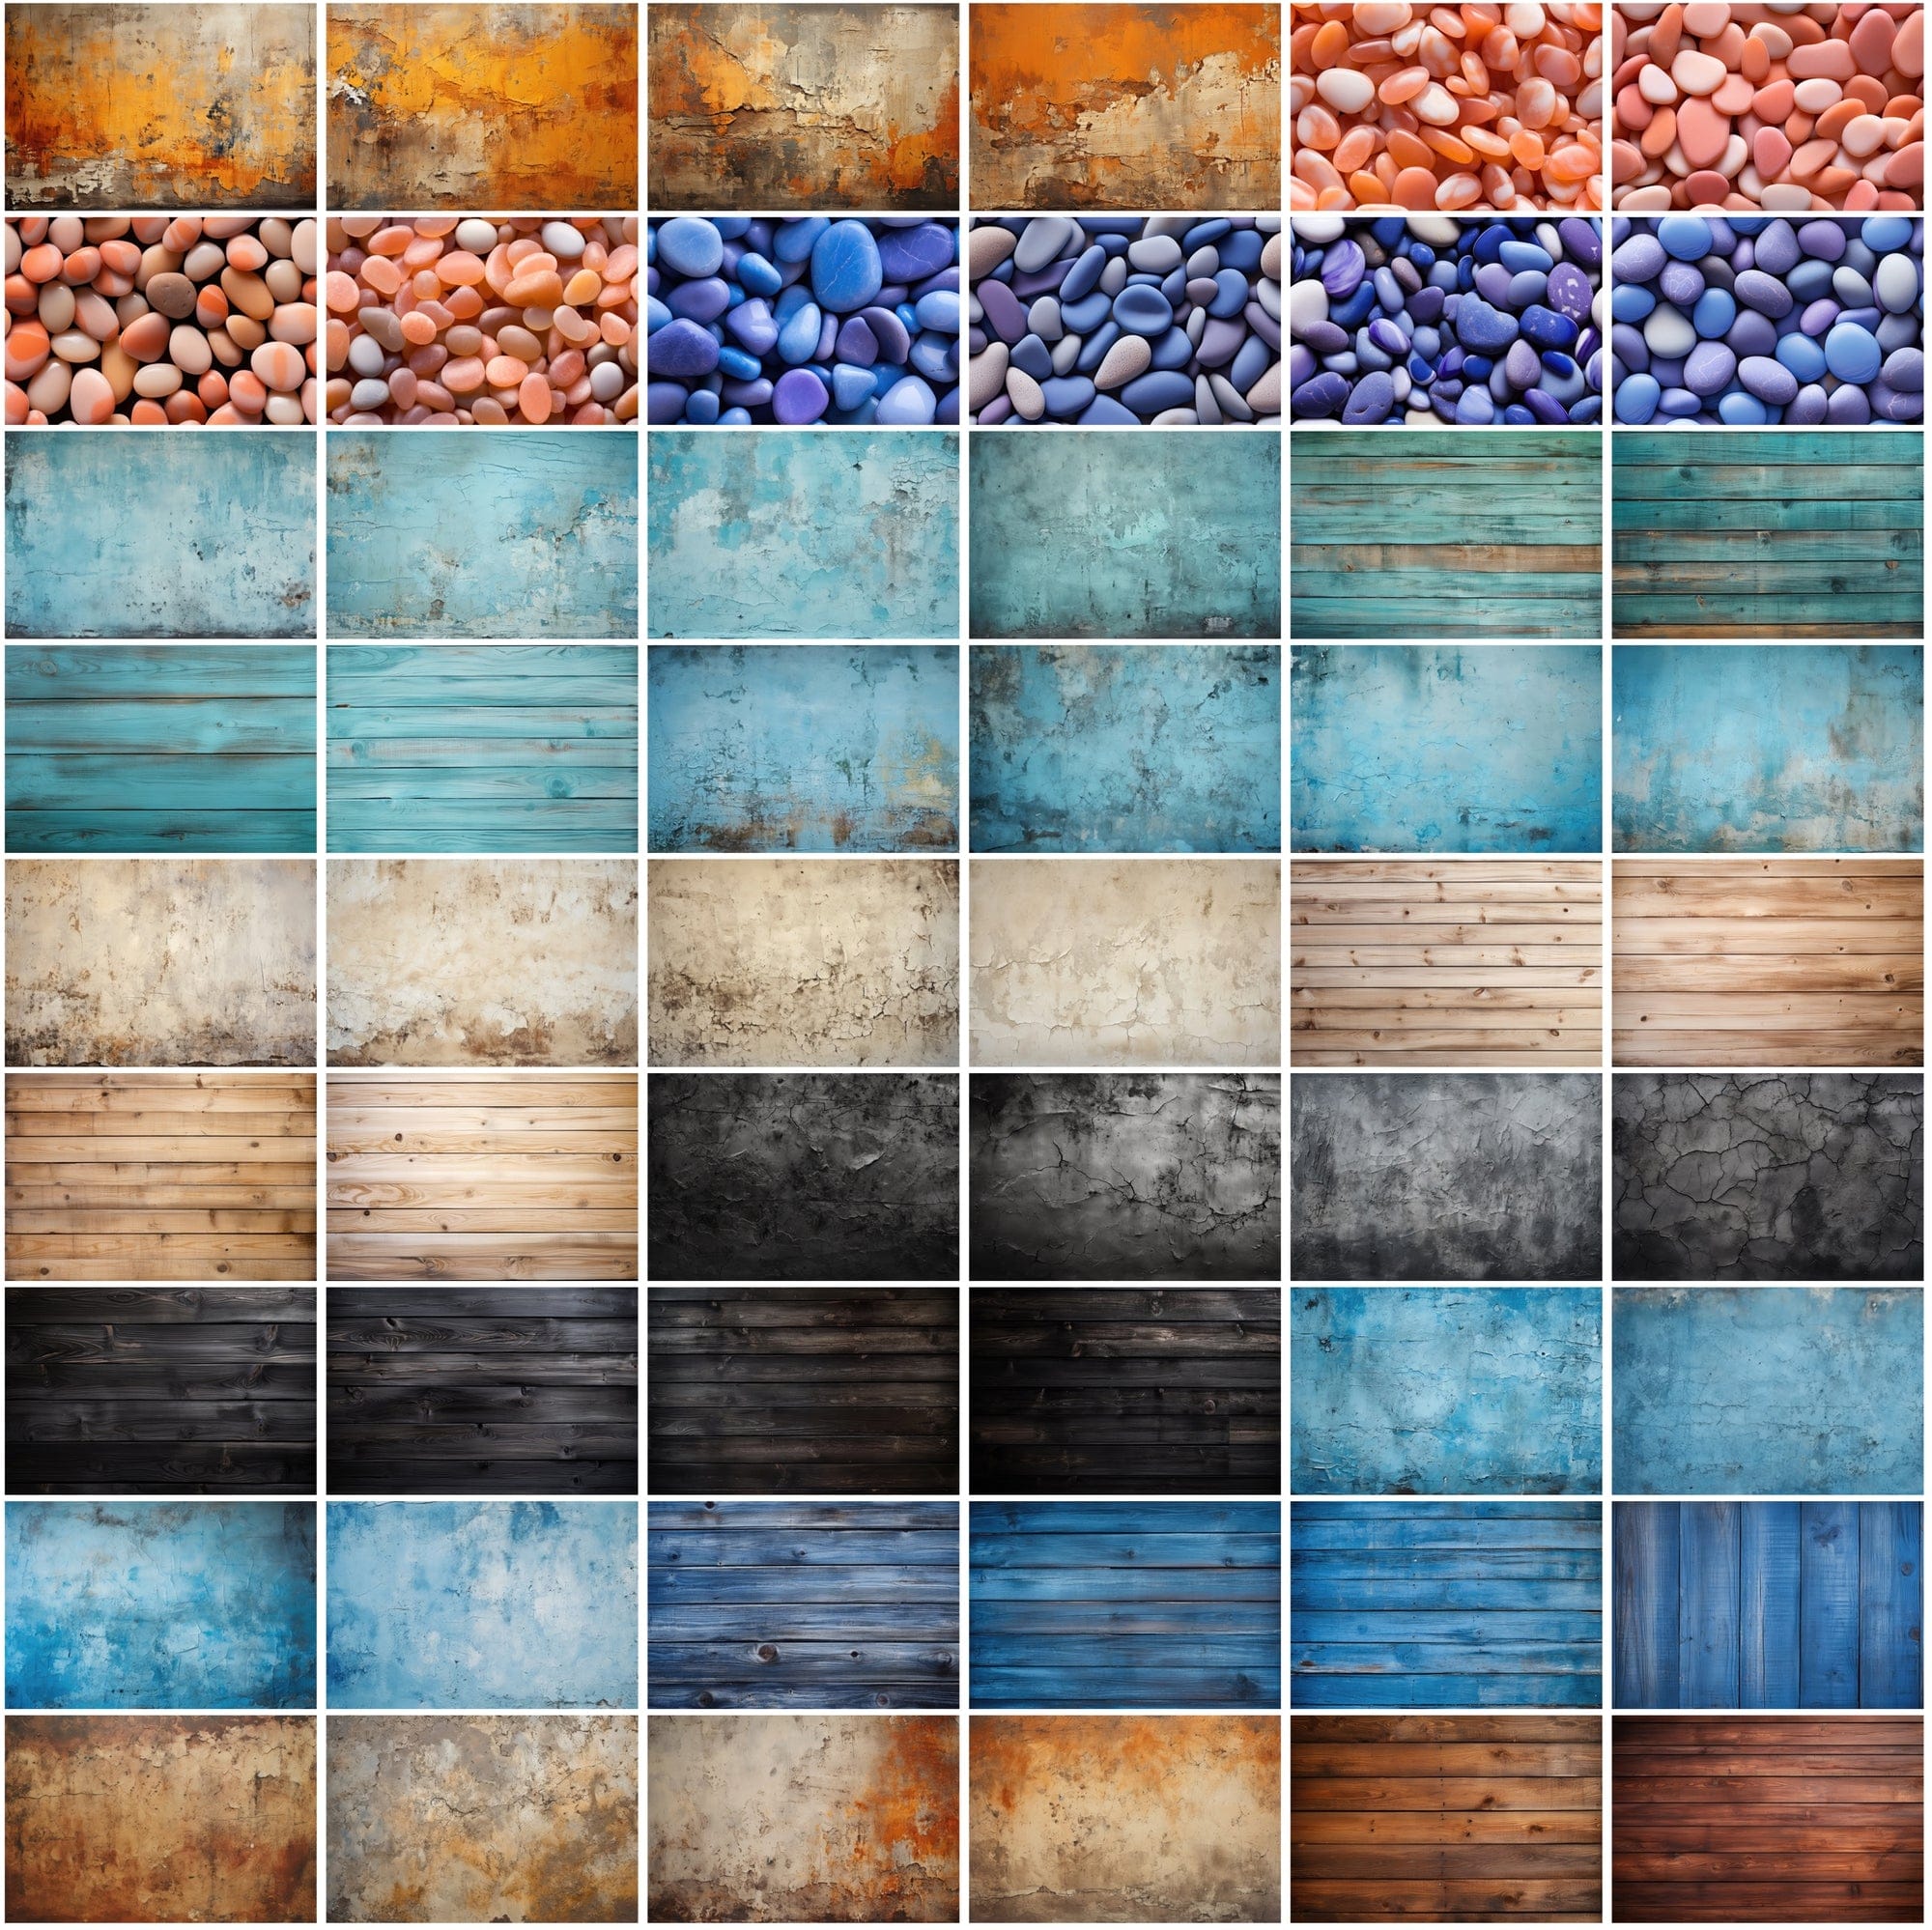 Ultimate Collection: 700 Wood, Grunge & Pebble Textures Digital Download Sumobundle